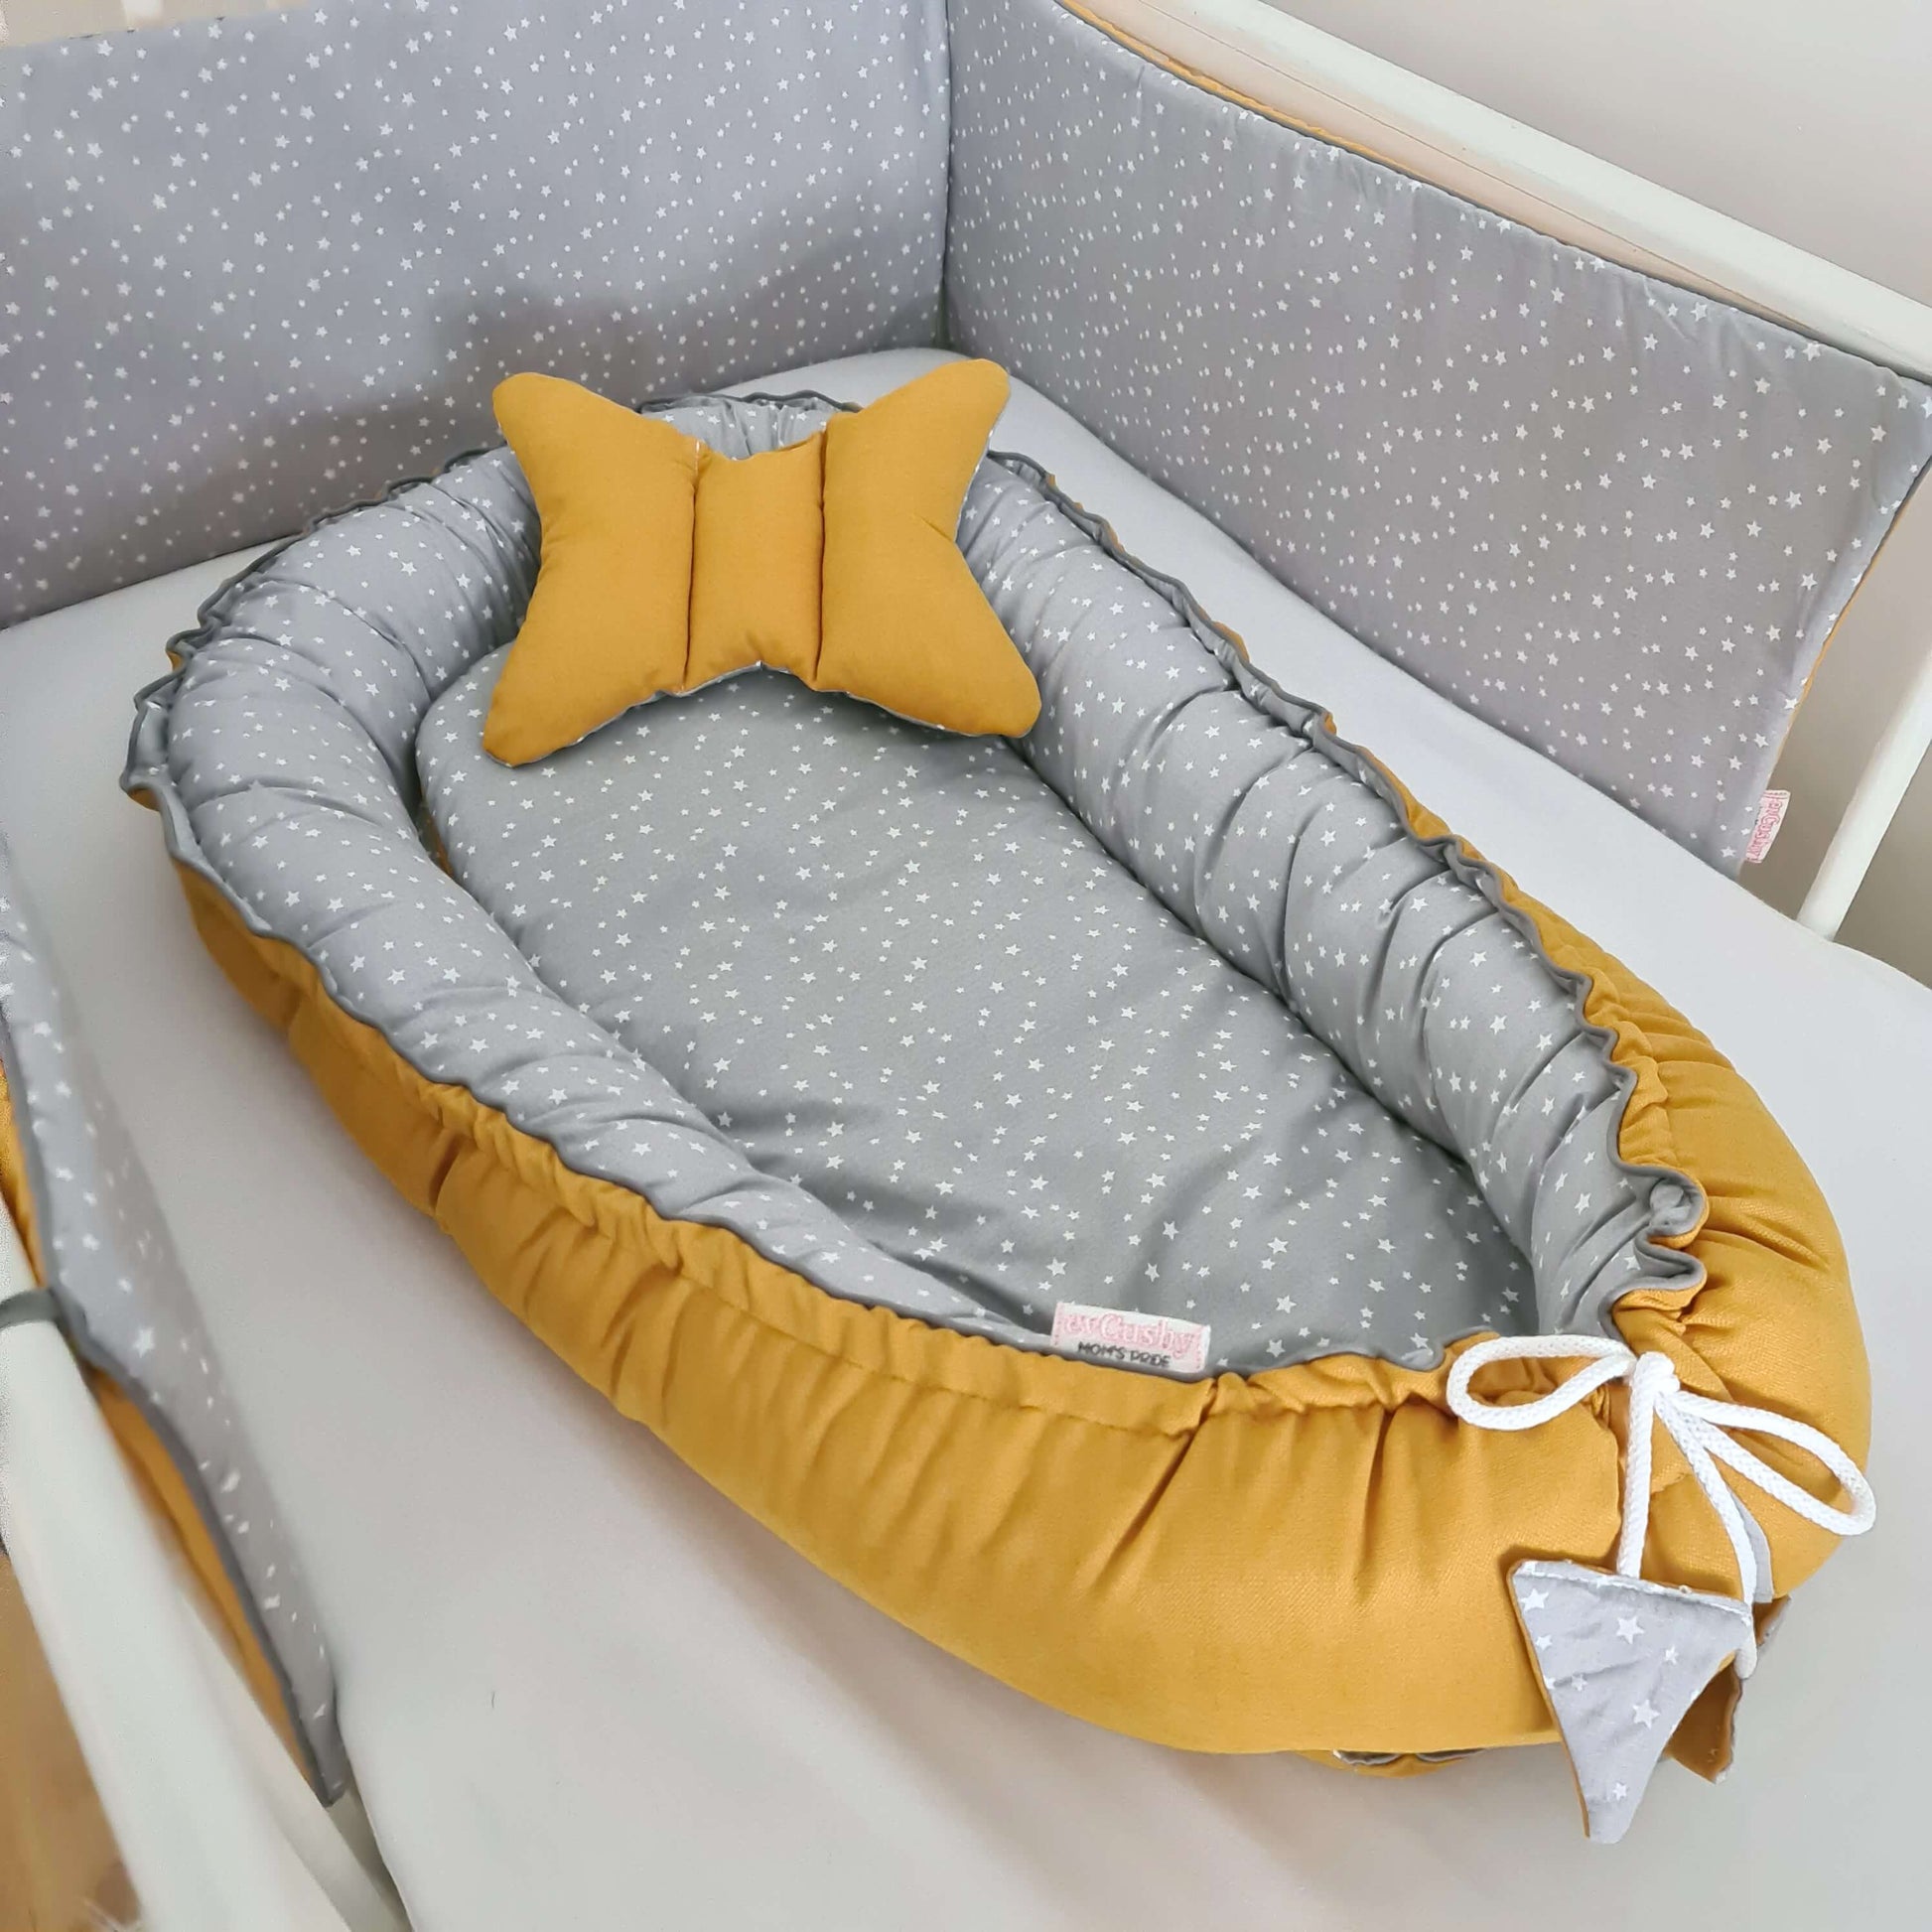 sleep pod for new baby cotton safe baby cushion